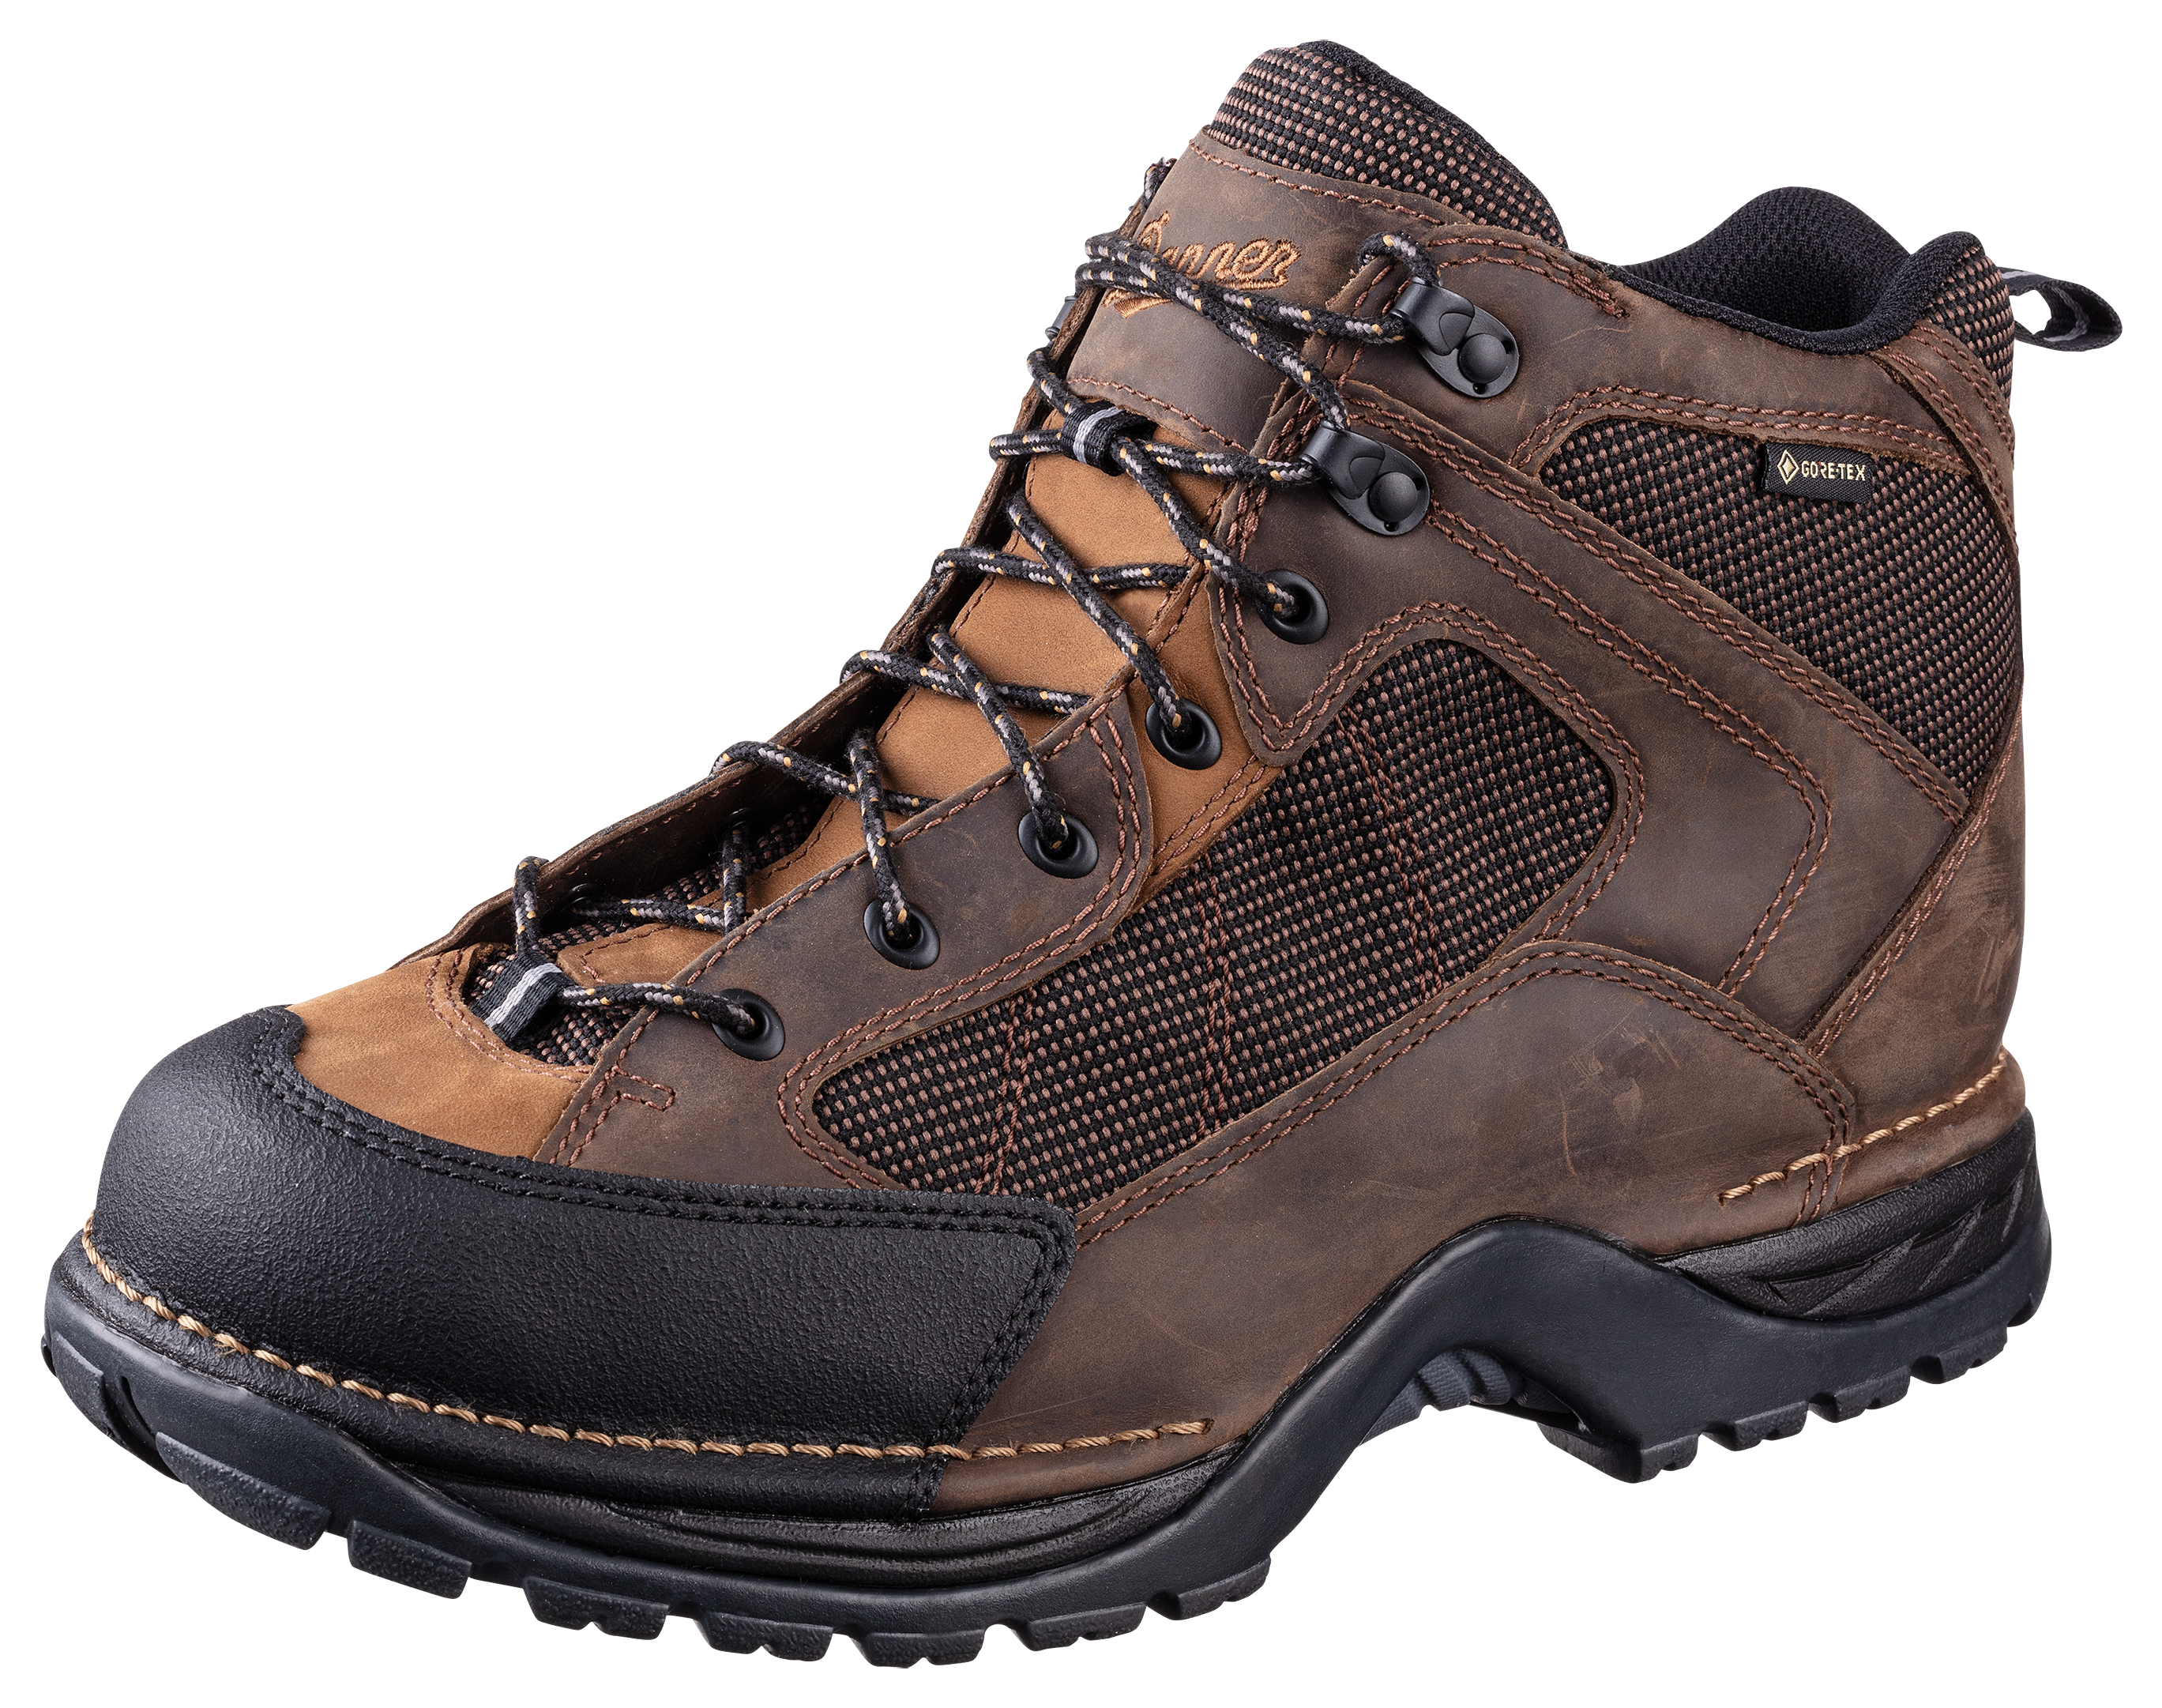 Danner Radical 452 GORE-TEX Hiking Boots for Men - Dark Brown - 8.5W